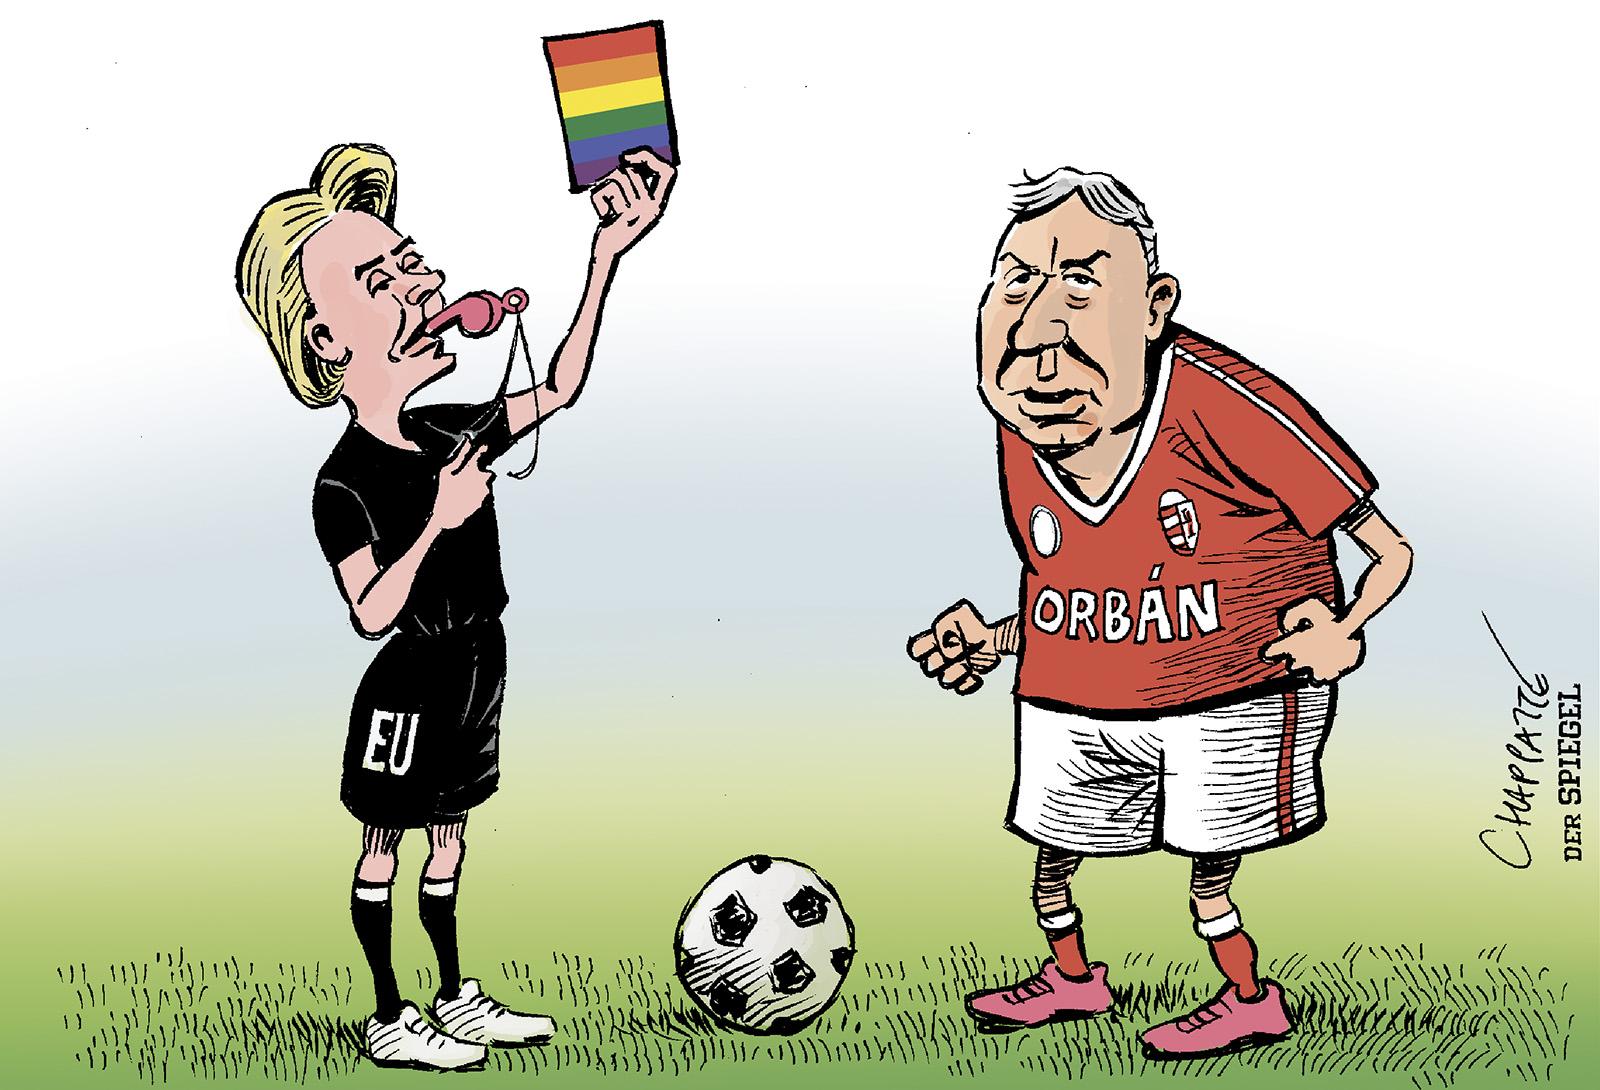 Viktor Orbán's homophobic policies